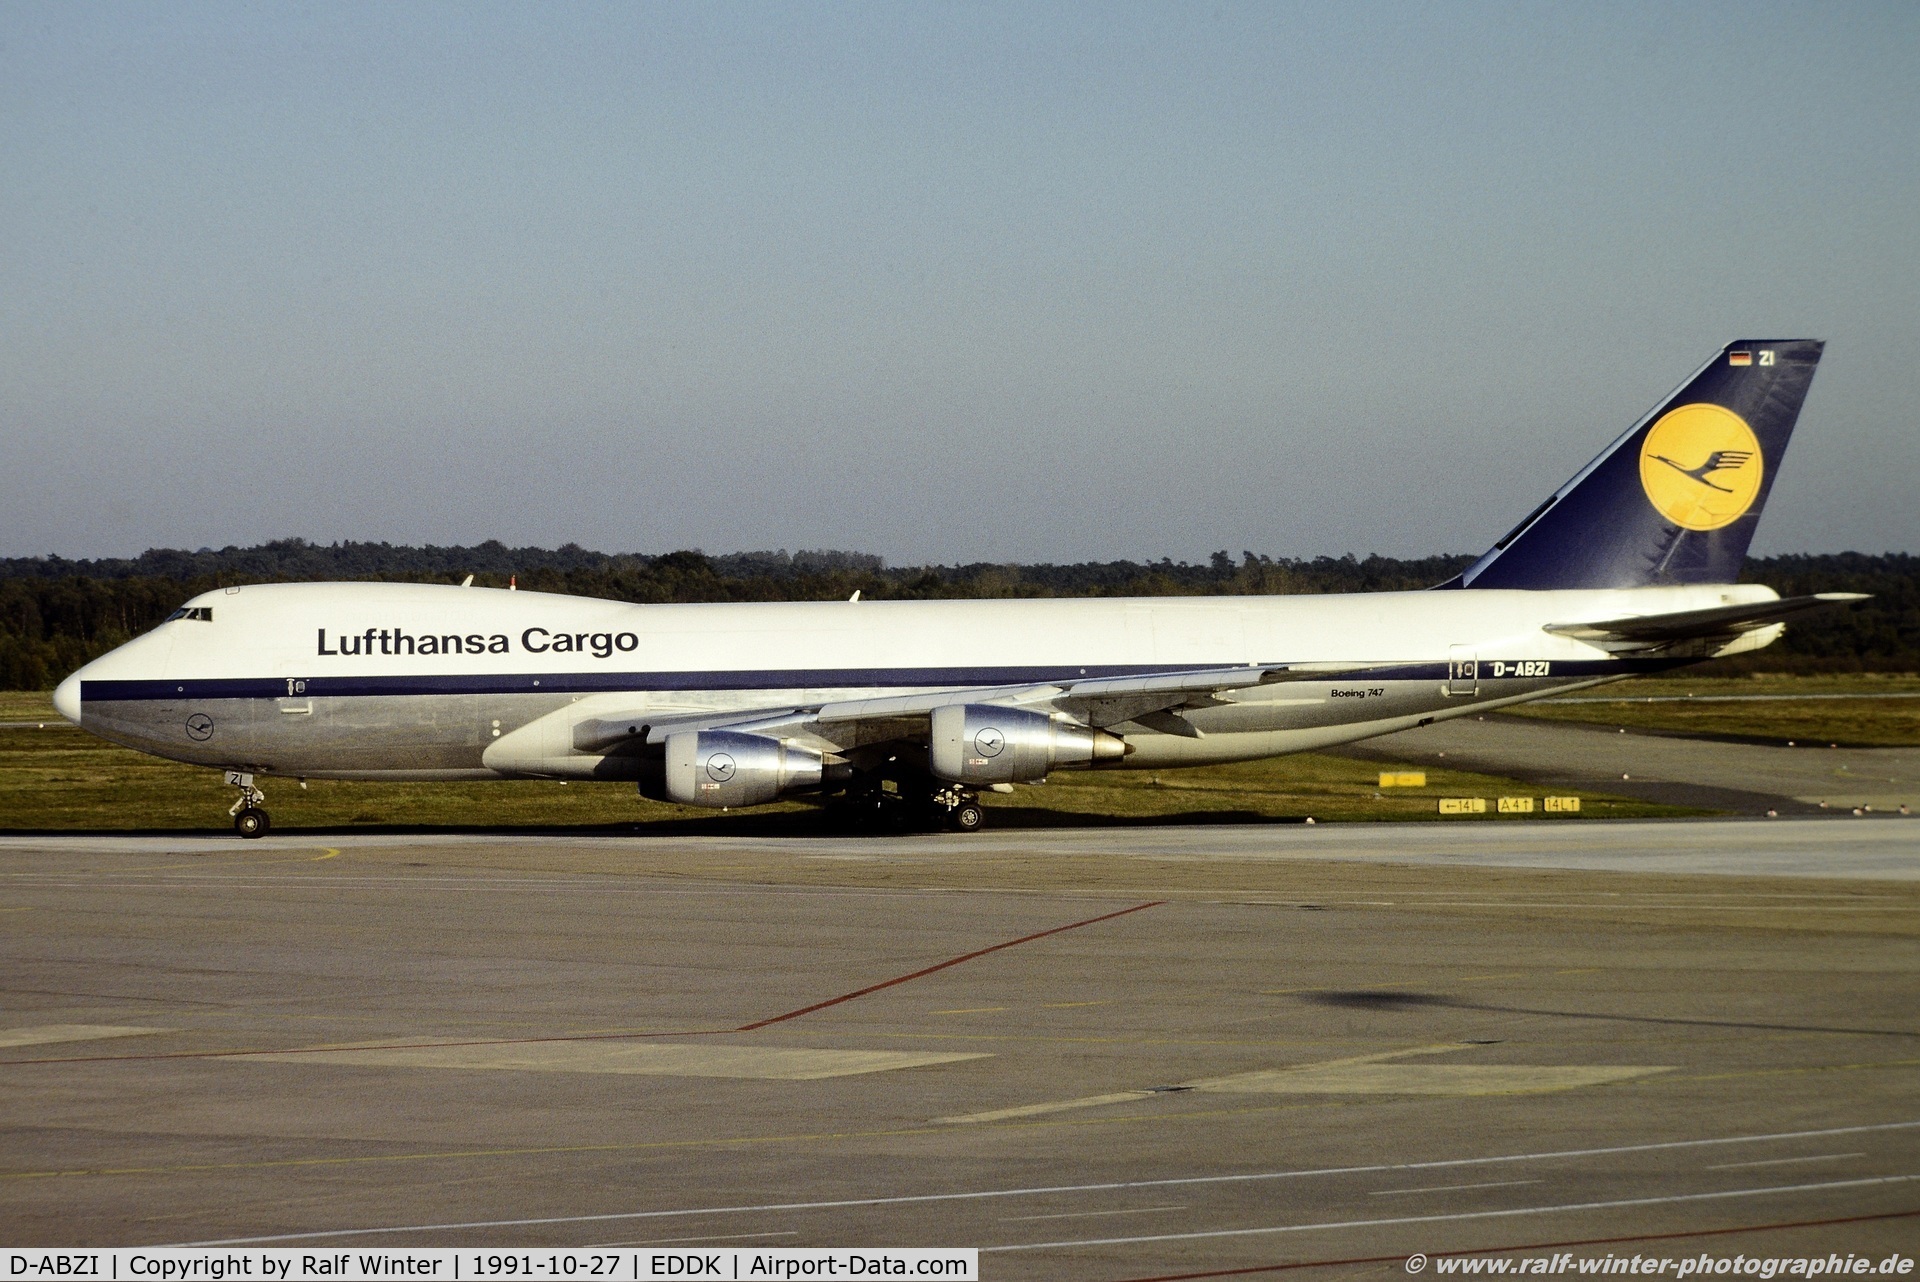 D-ABZI, 1988 Boeing 747-230F C/N 24138, Boeing 747-230F (SCD) - Lufthansa Cargo 'Australia' - D-ABZI - 27.10.1991 - CGN - From a slide